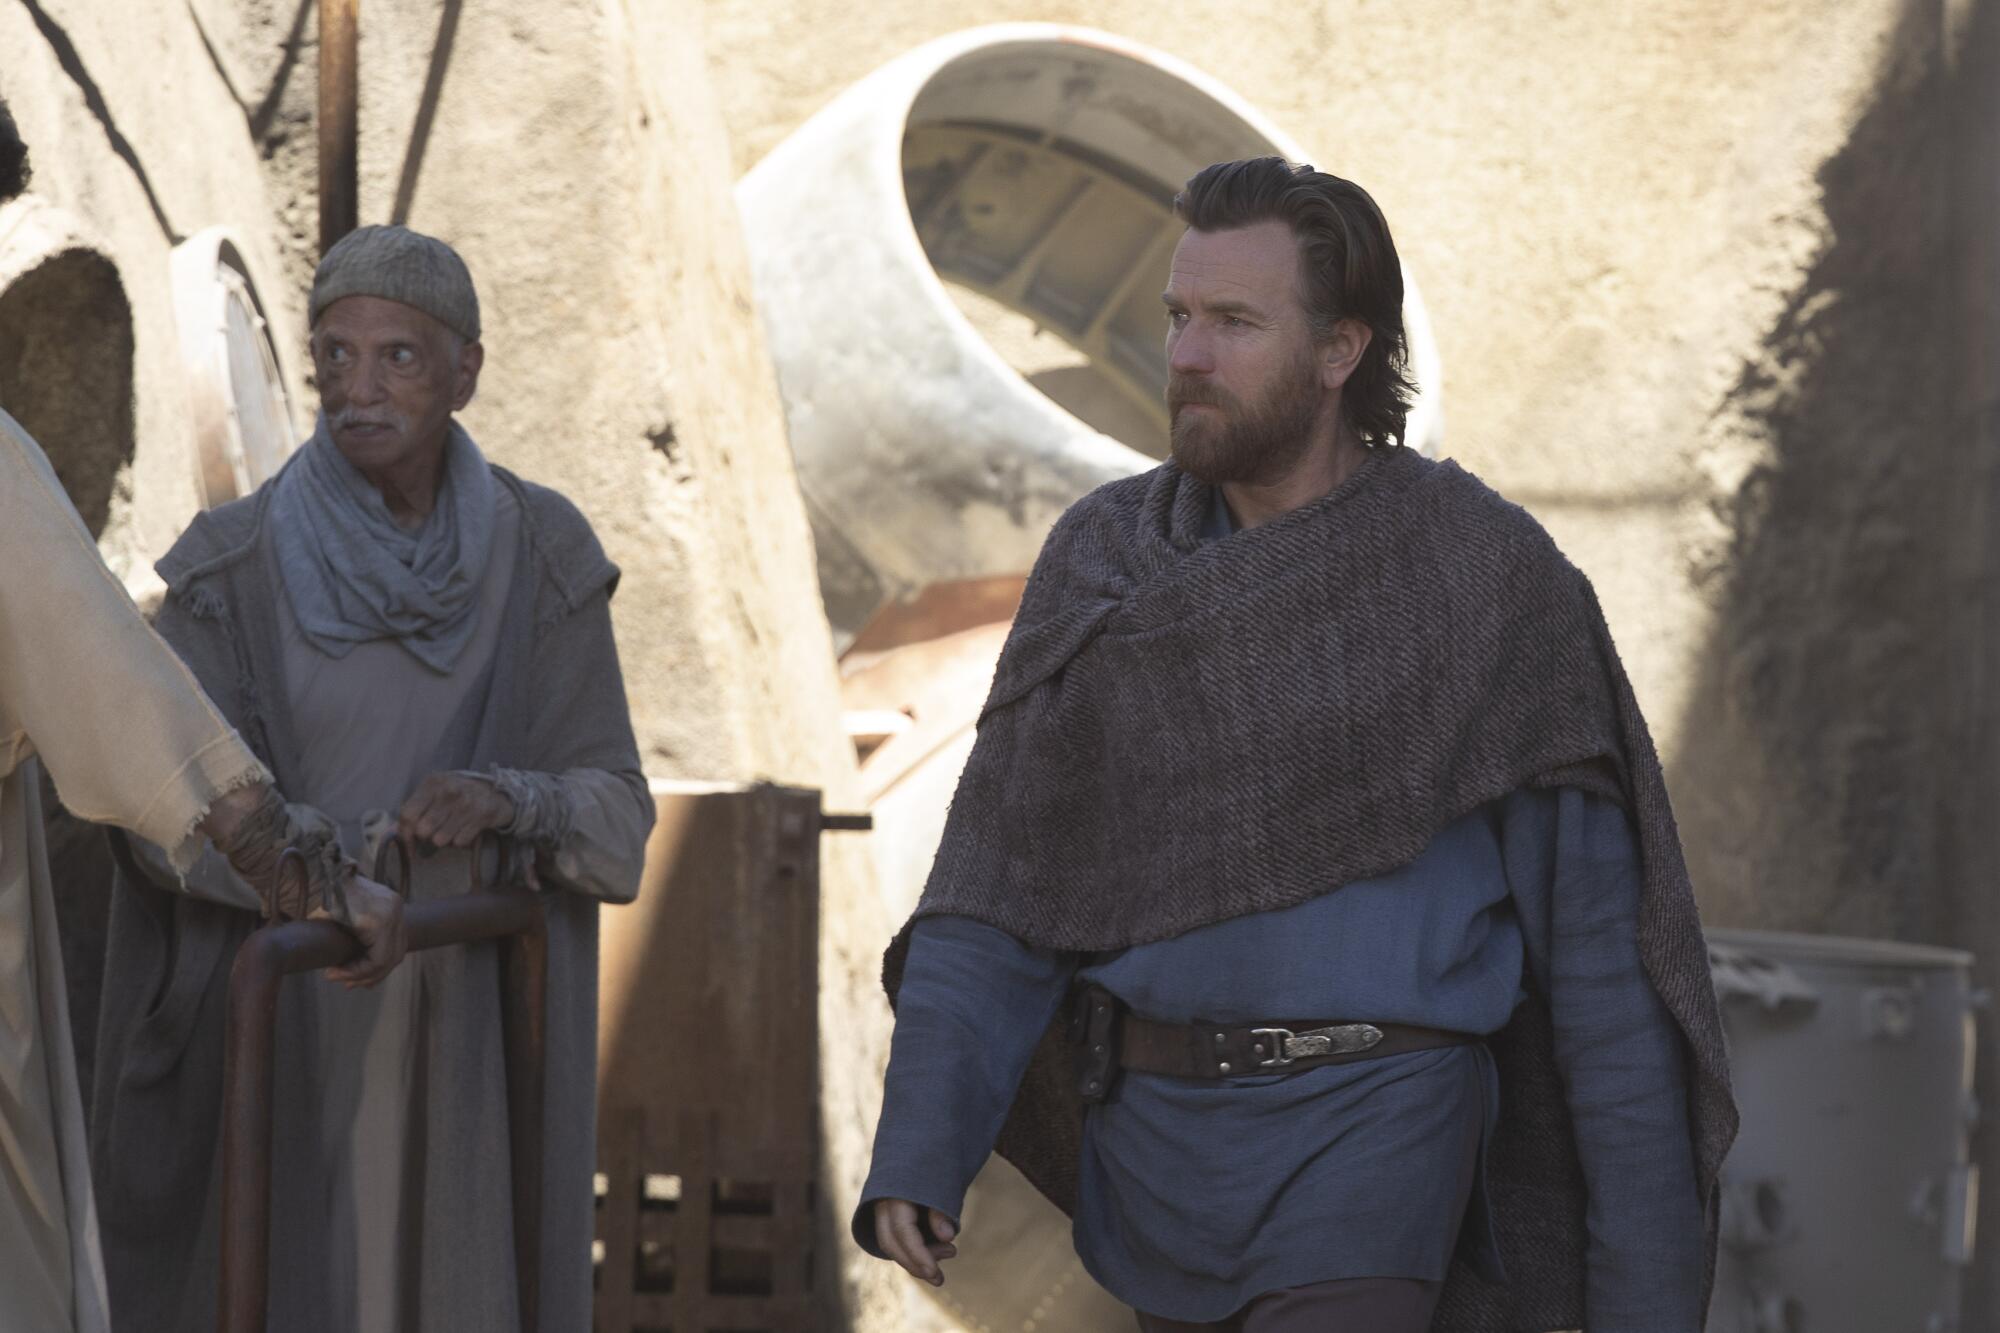 A bearded man walking through a town from the series. "Obi-Wan Kenobi."